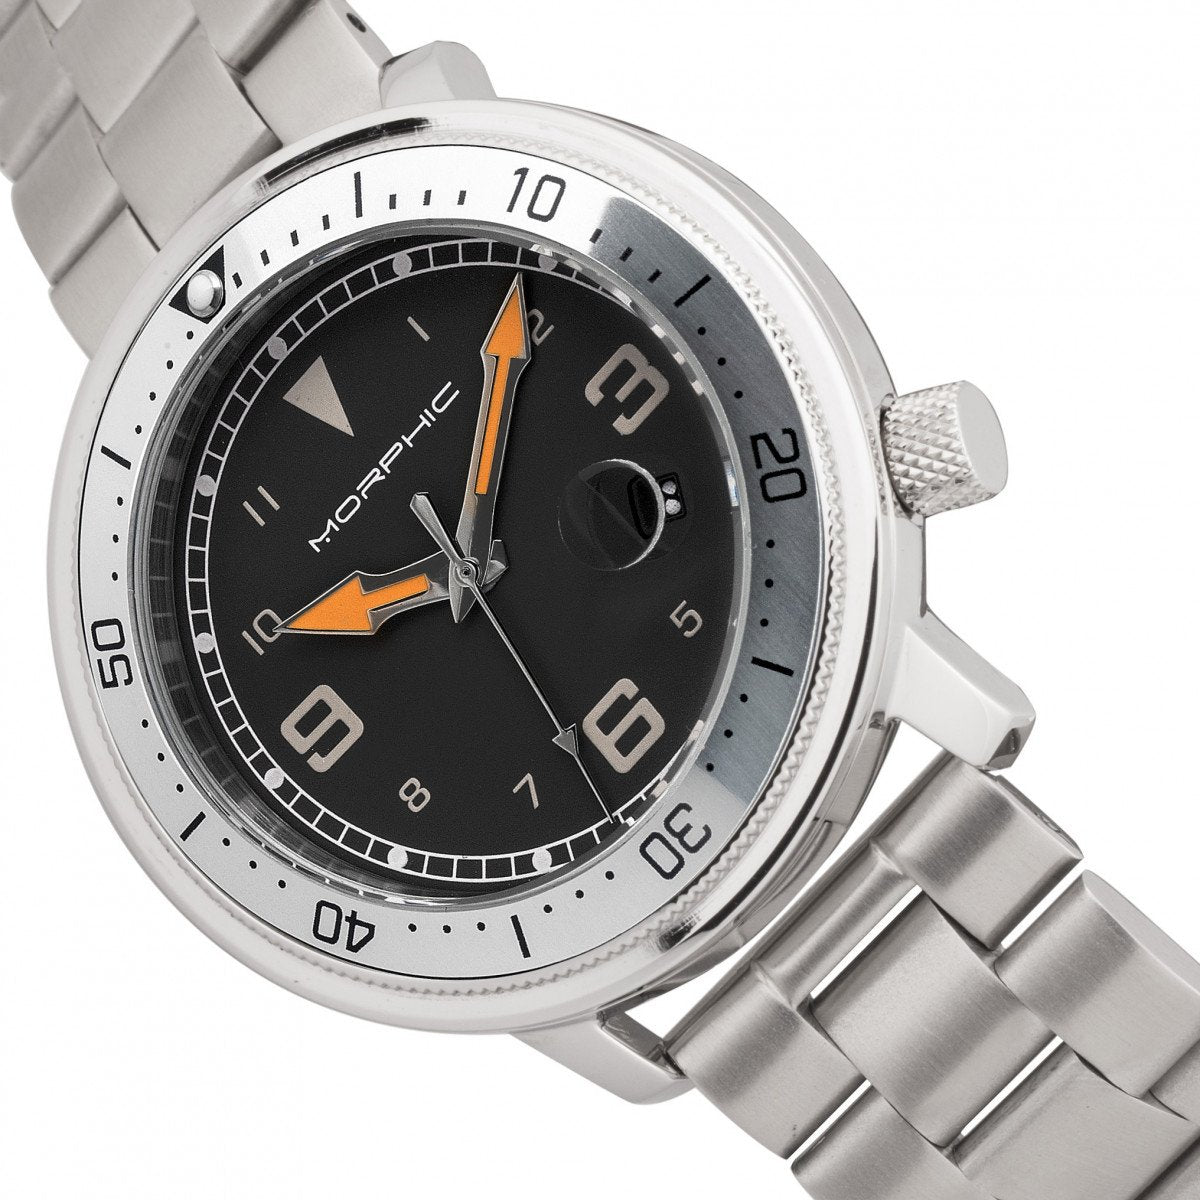 Morphic M74 Series Bracelet Watch w/Magnified Date Display - Gunmetal/Silver/Black - MPH7401